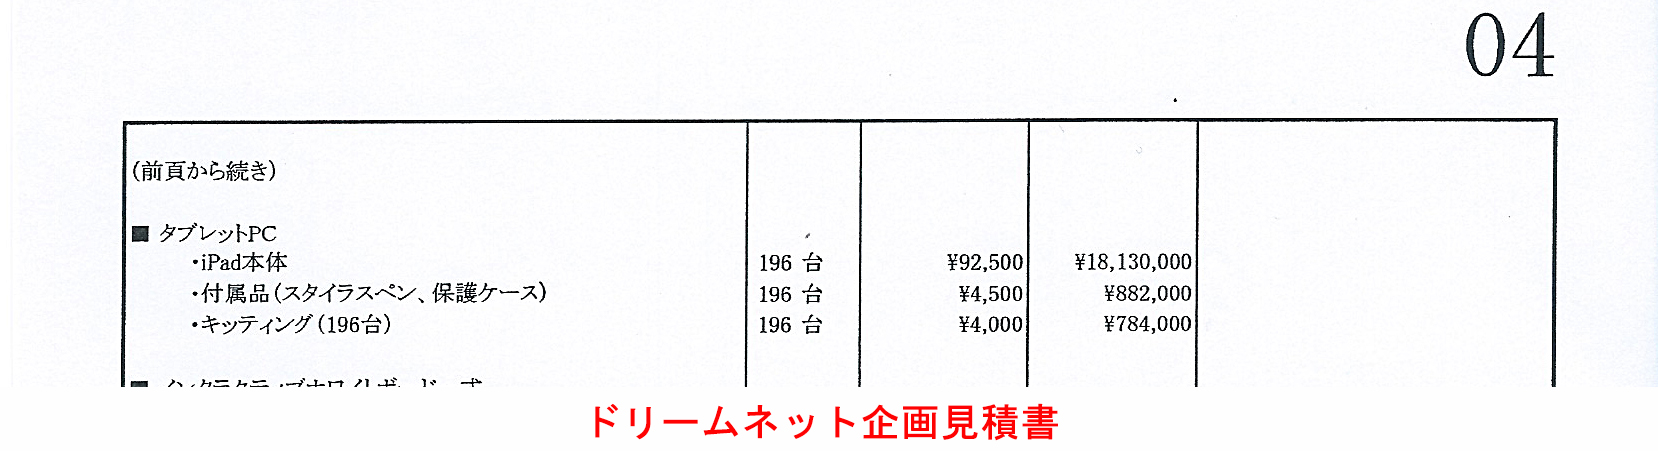 http://hunter-investigate.jp/news/2015/04/22/%E3%83%89%E3%83%AA%E3%83%BC%E3%83%A0%E8%A6%8B%E7%A9%8D1.jpg